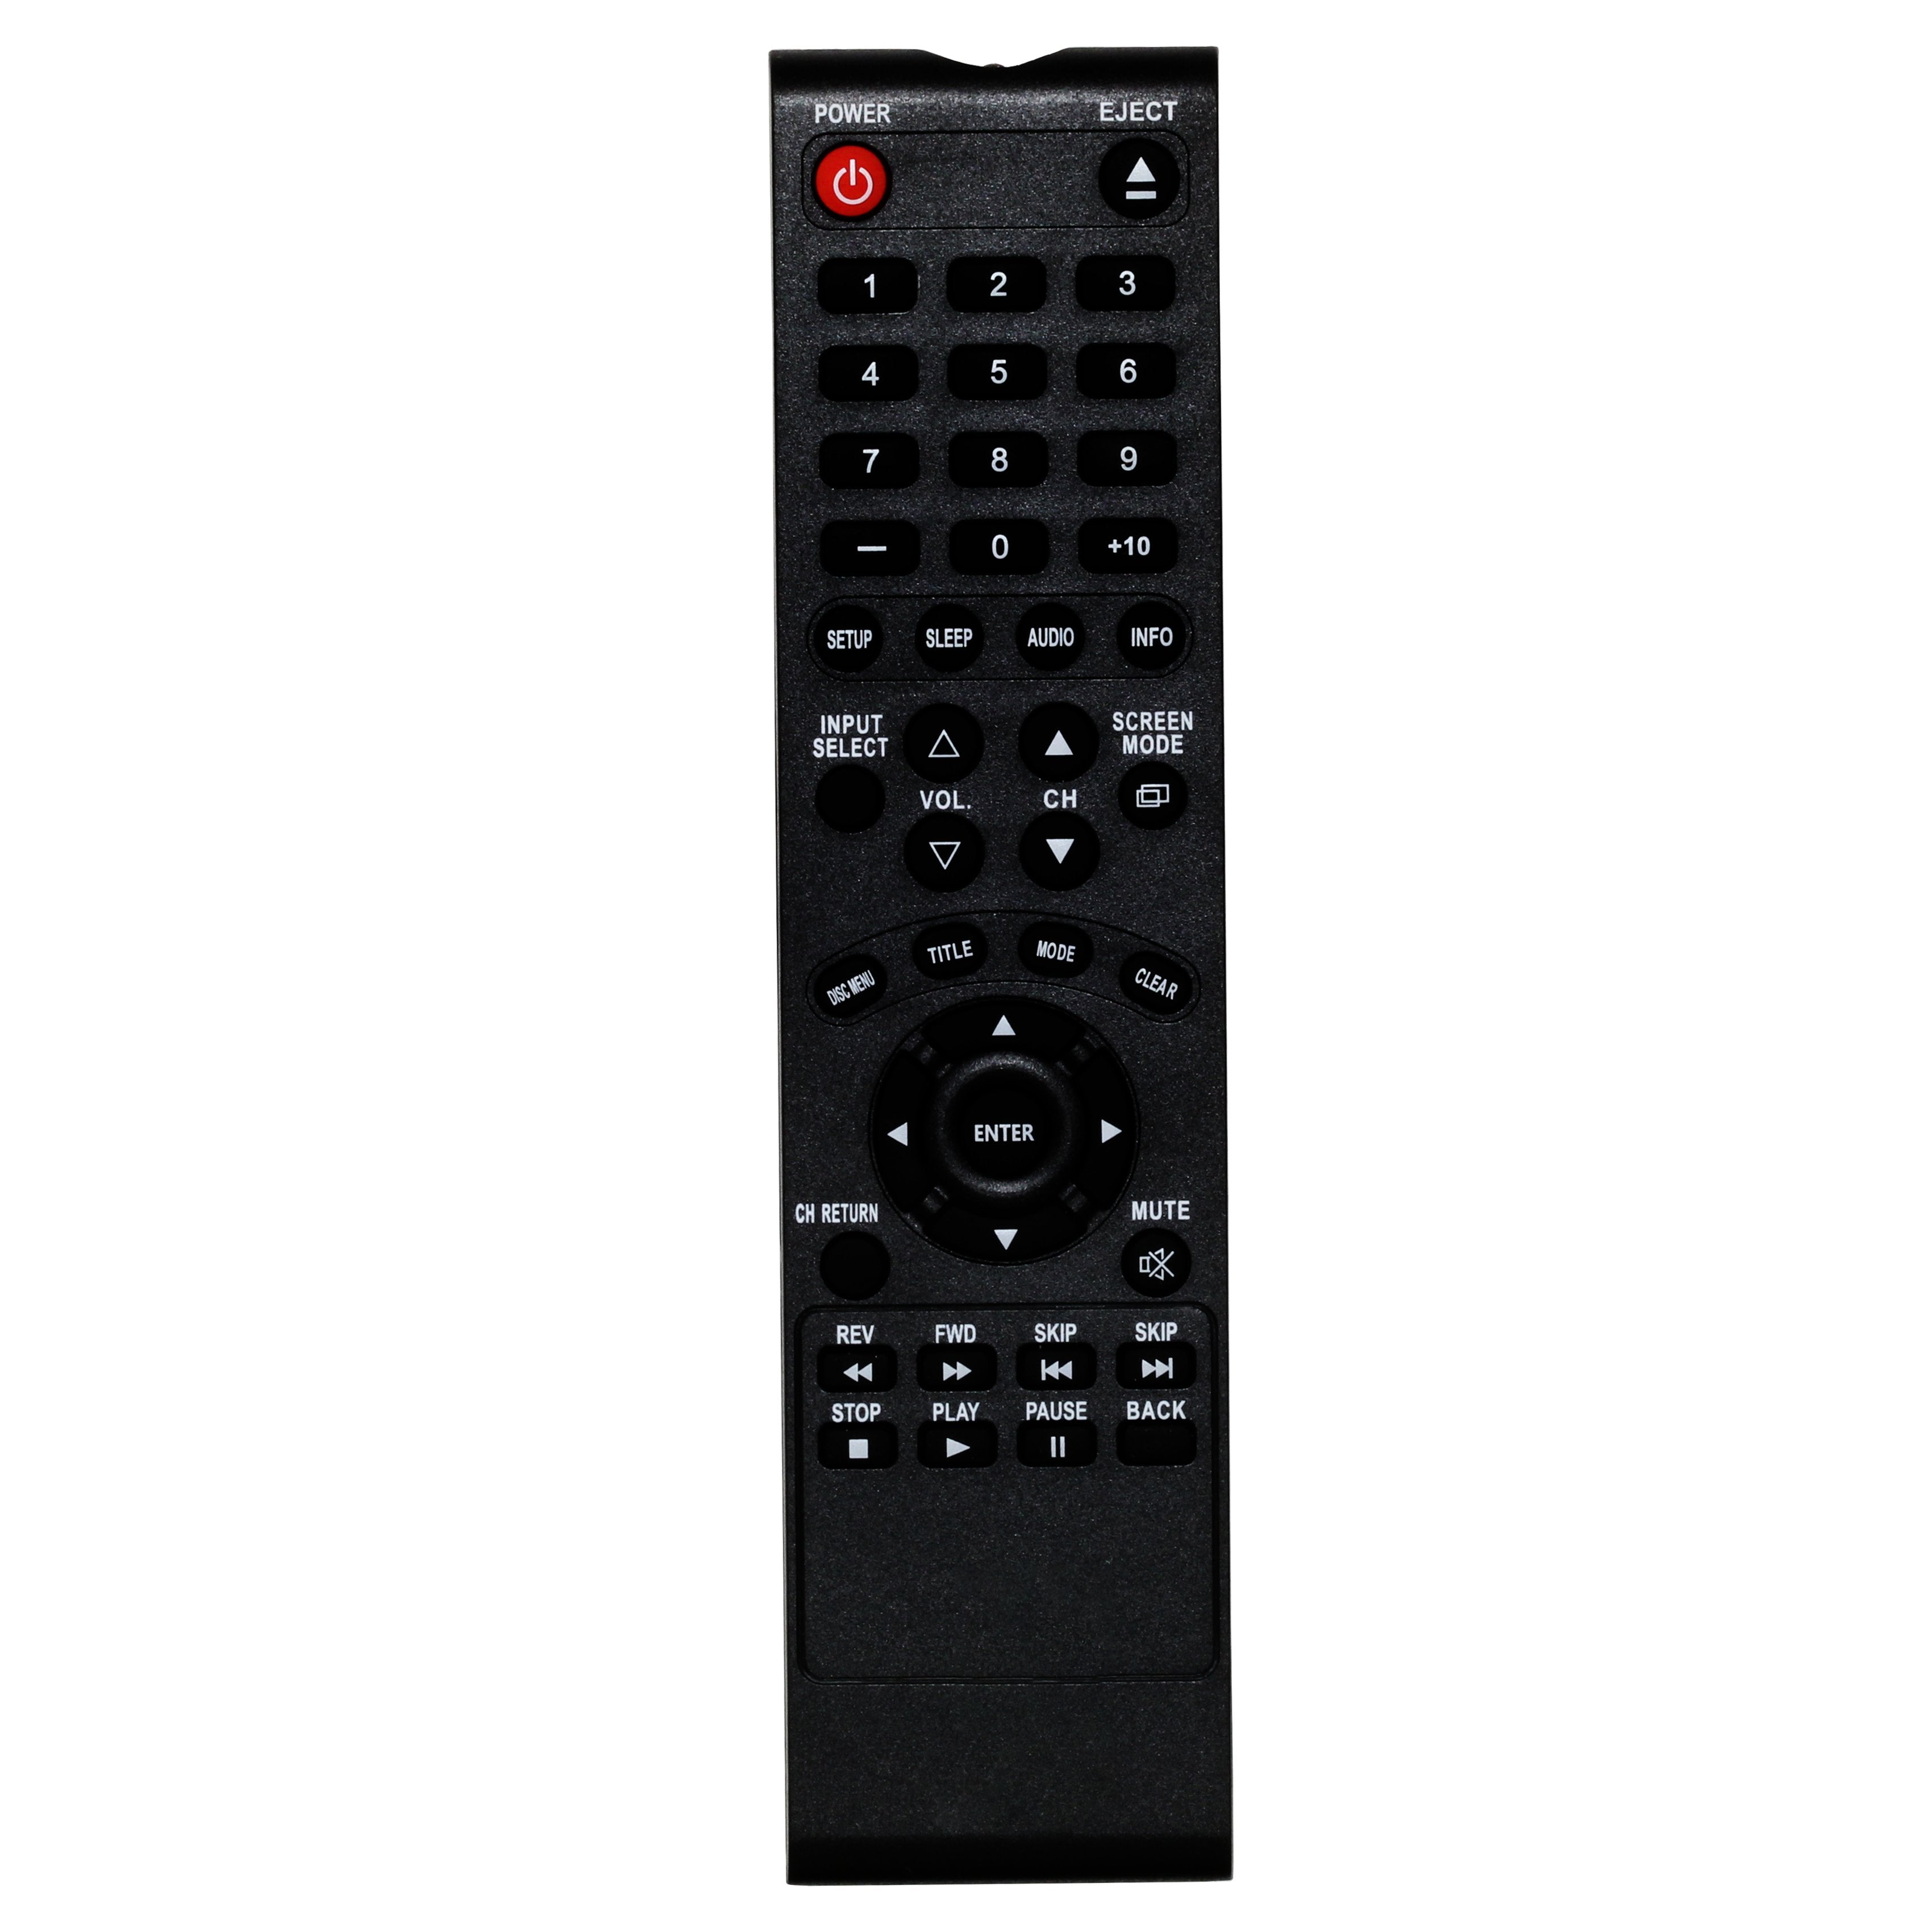 Sylvania RRH801  TV Remote